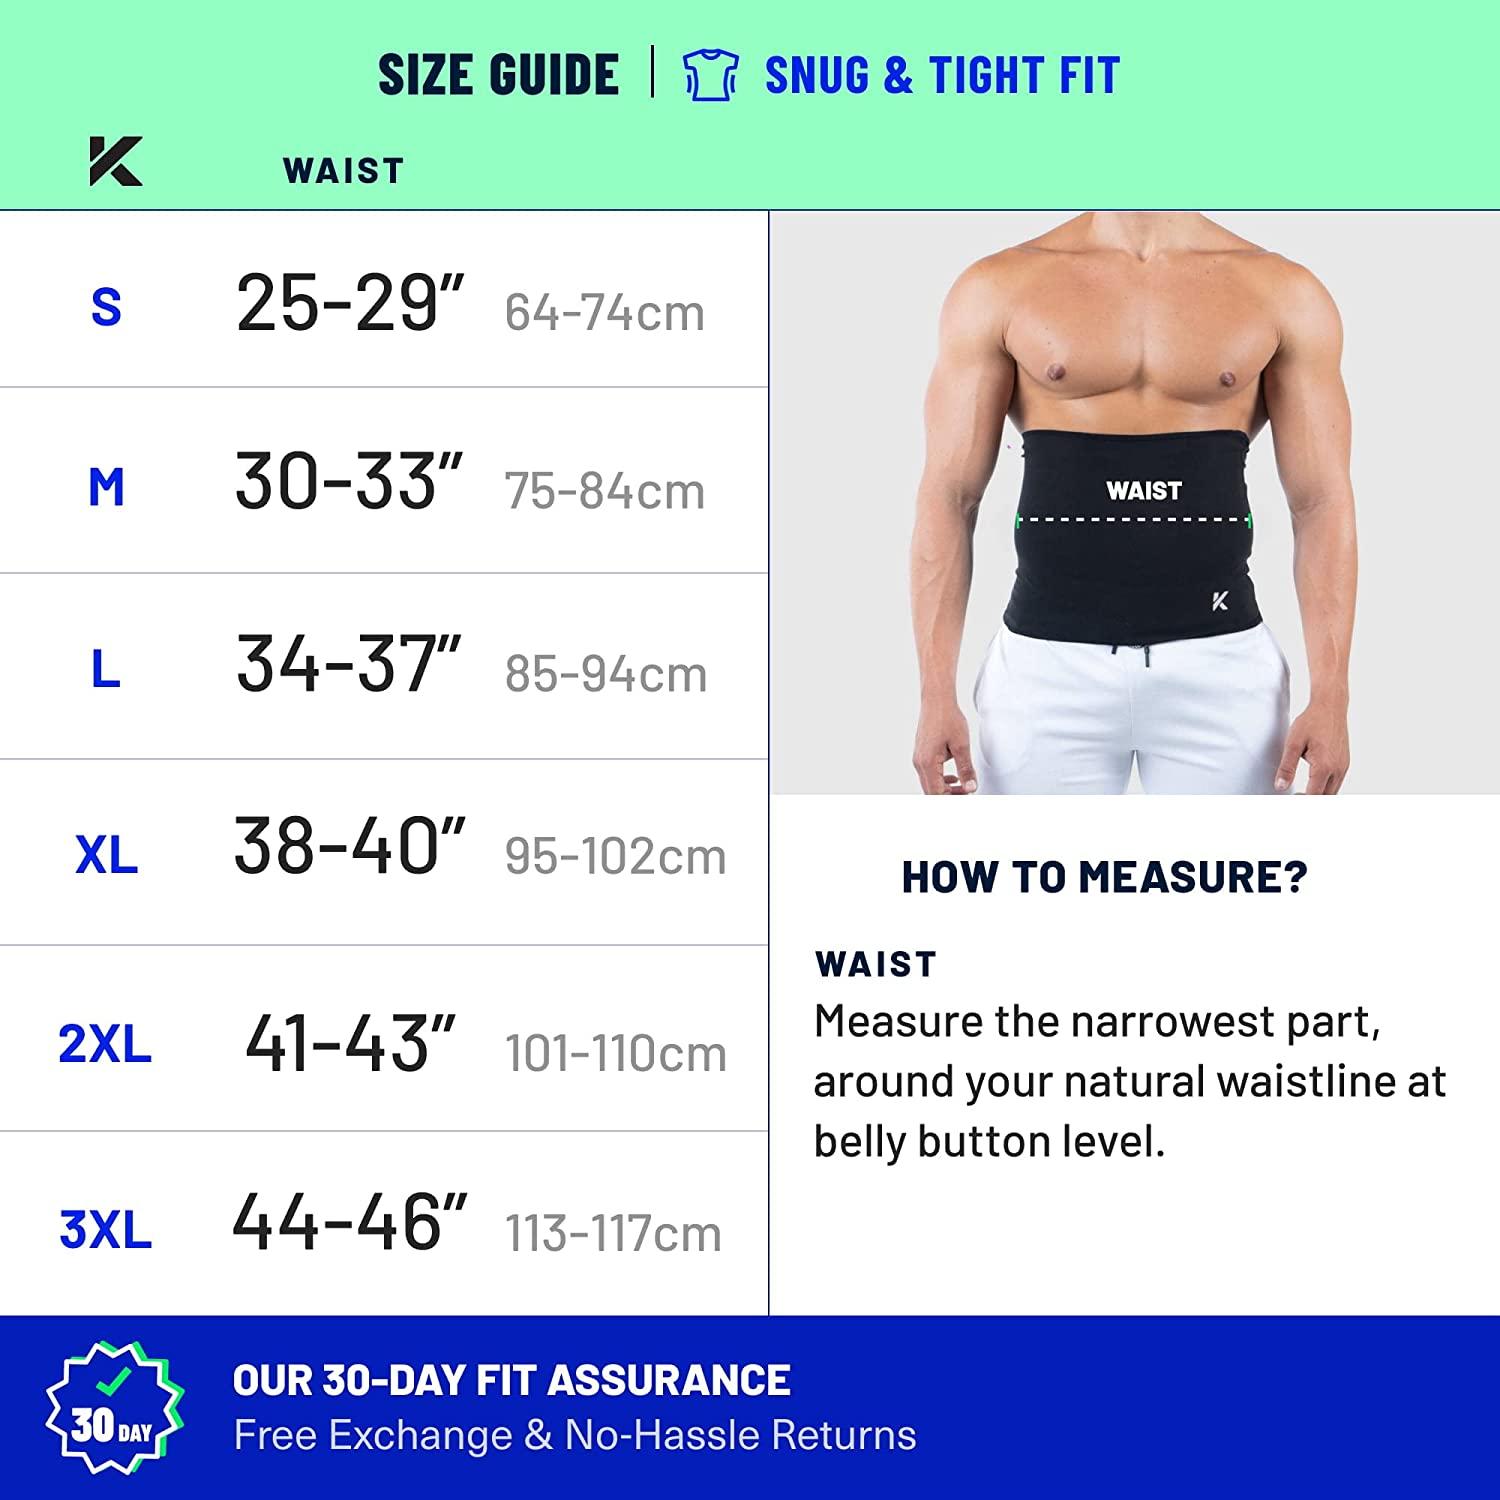 Kewlioo Men's Heat Trapping Waist Toner - Sweat Body Shaper Vest for Men,  Mens Bodysuit Slimmer Sauna Suits, Shapewear Compression Top Shirt, Strong  Waist Grip, Versatile and Discreet Medium